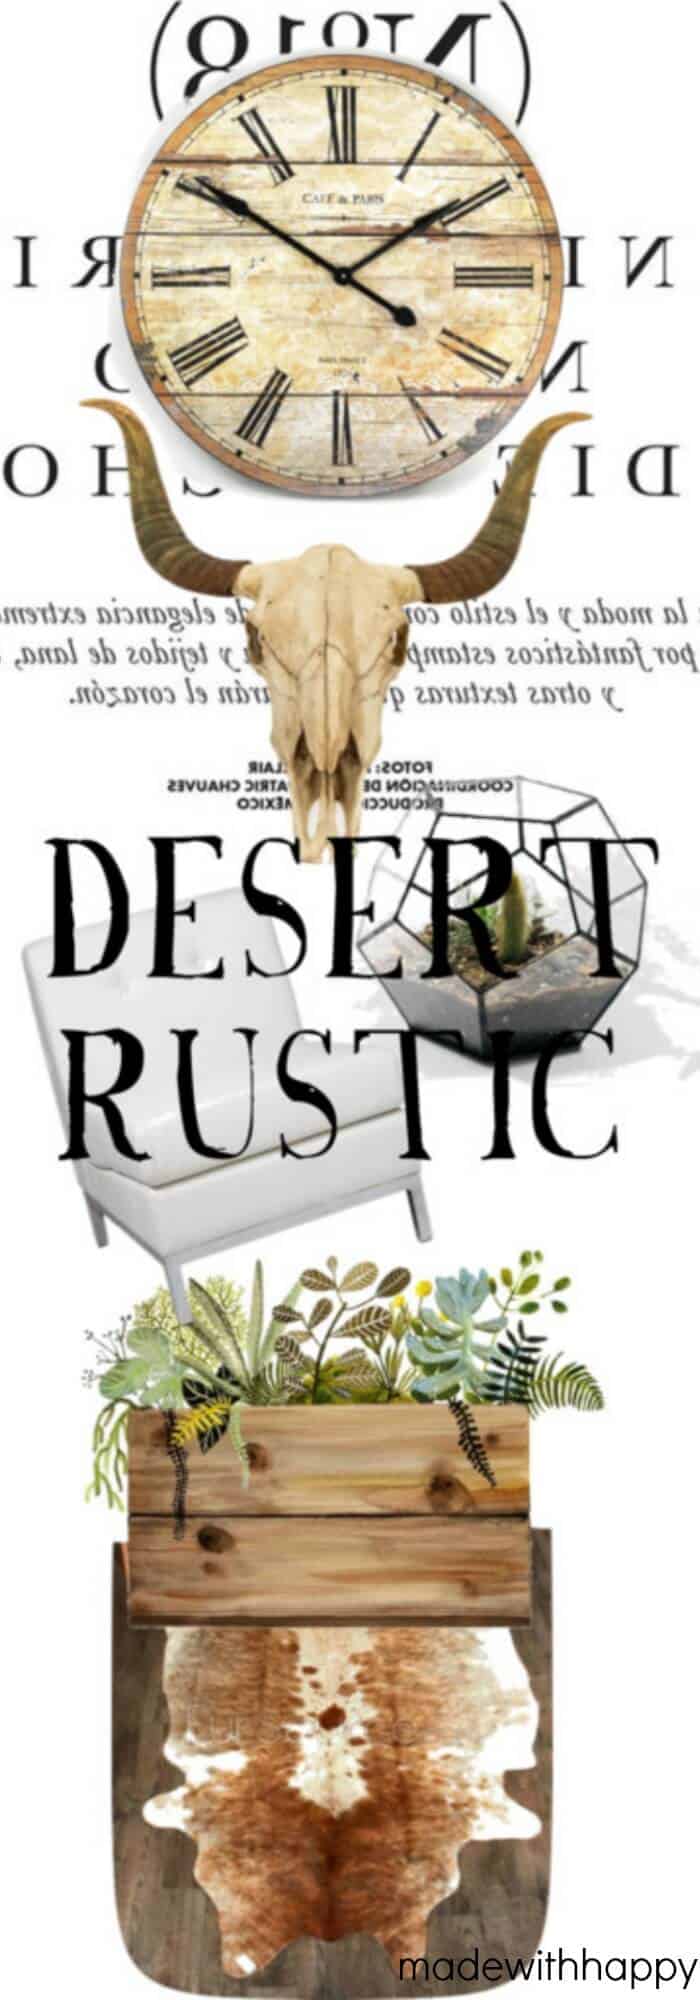 Room Inspirations | Desert Rustic | Decorate your house with the rustic desert feel. | Decorate with animal skulls | www.madewithHAPPY.com